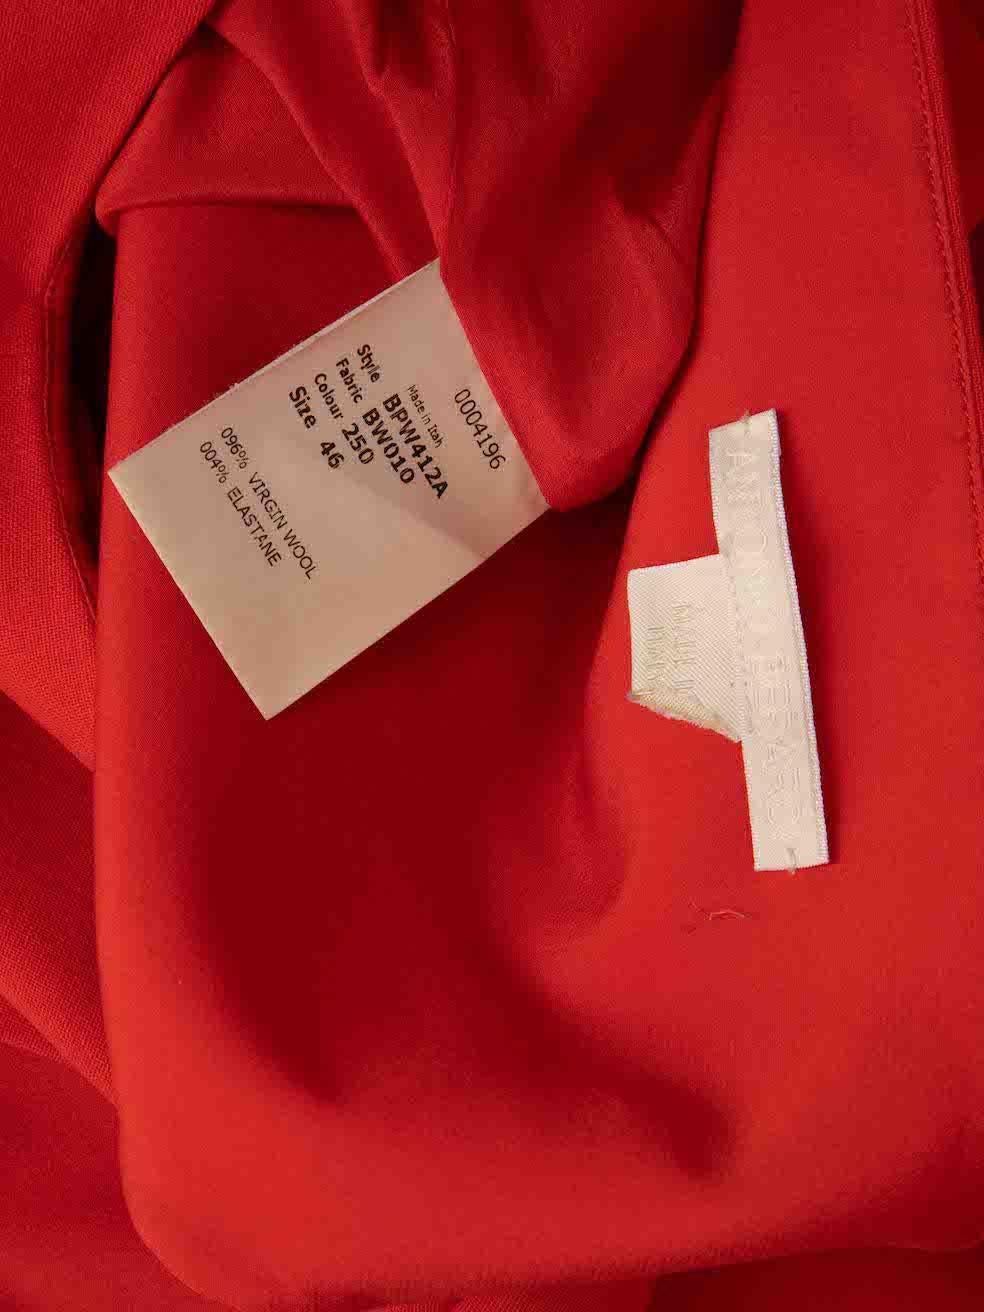 Antonio Berardi Red Side Zipper Detail Dress Size XL For Sale 1